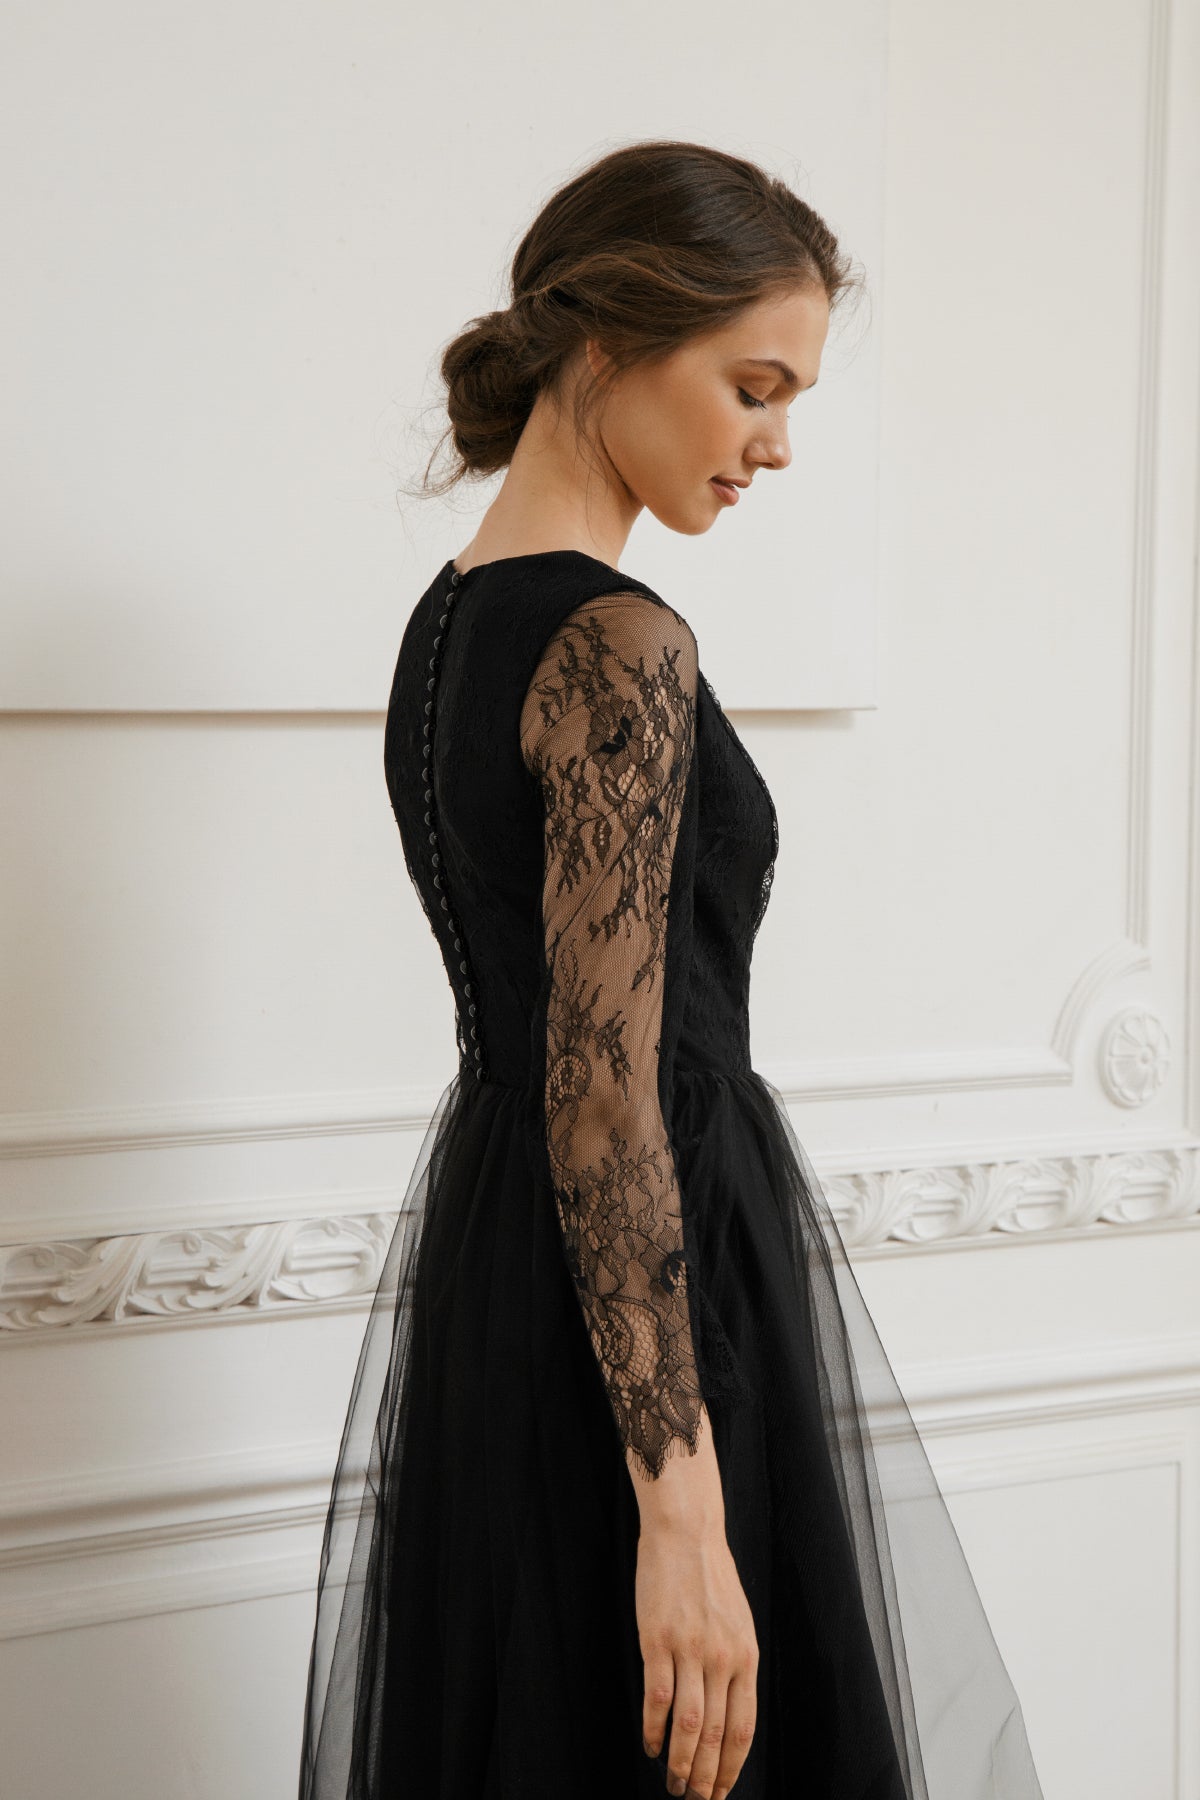 Black wedding dress • alternative wedding dress